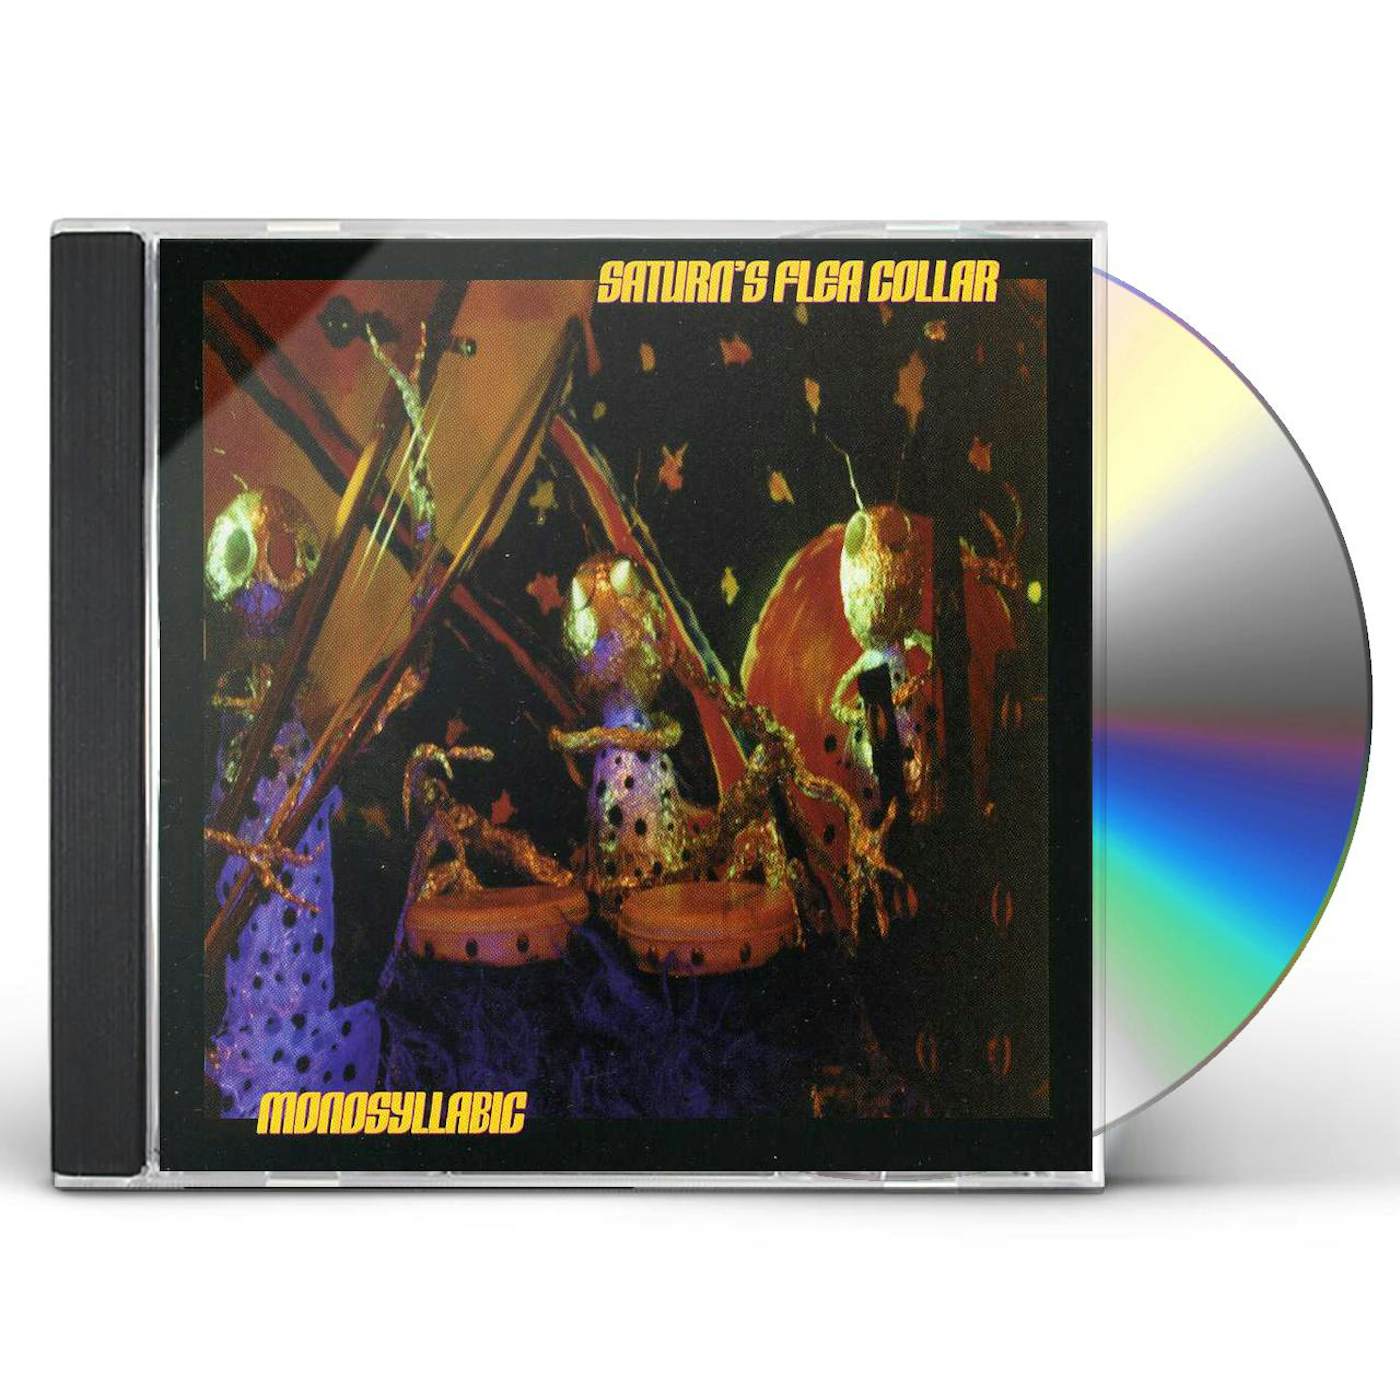 Saturn's Flea Collar MONOSYLLABIC CD